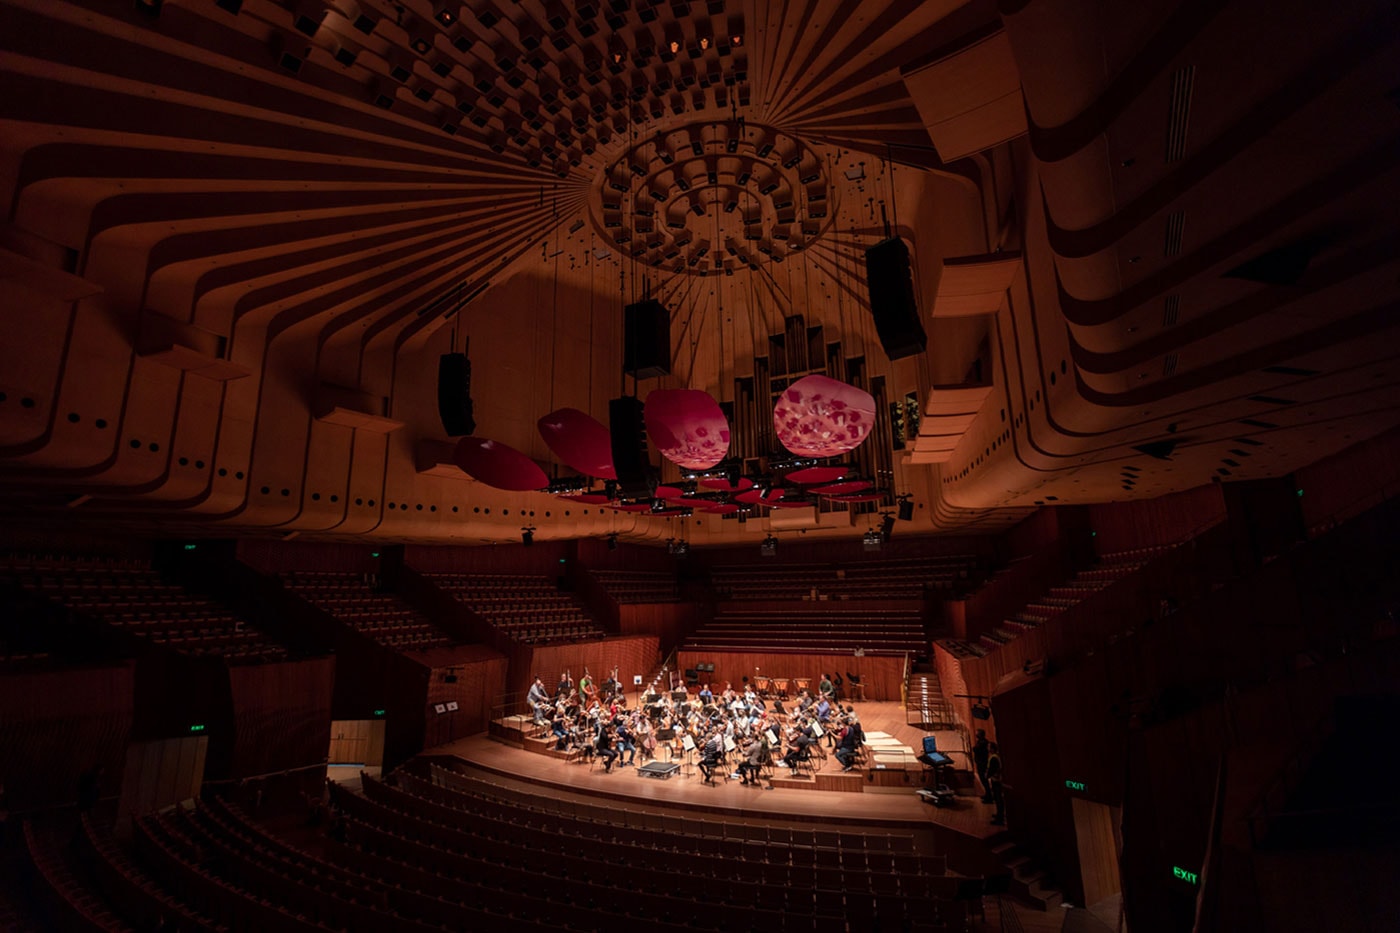 Newly Renovated Sydney Opera House Concert Hall Inside Look decade renewal renovations 18 petals lift reveal info 